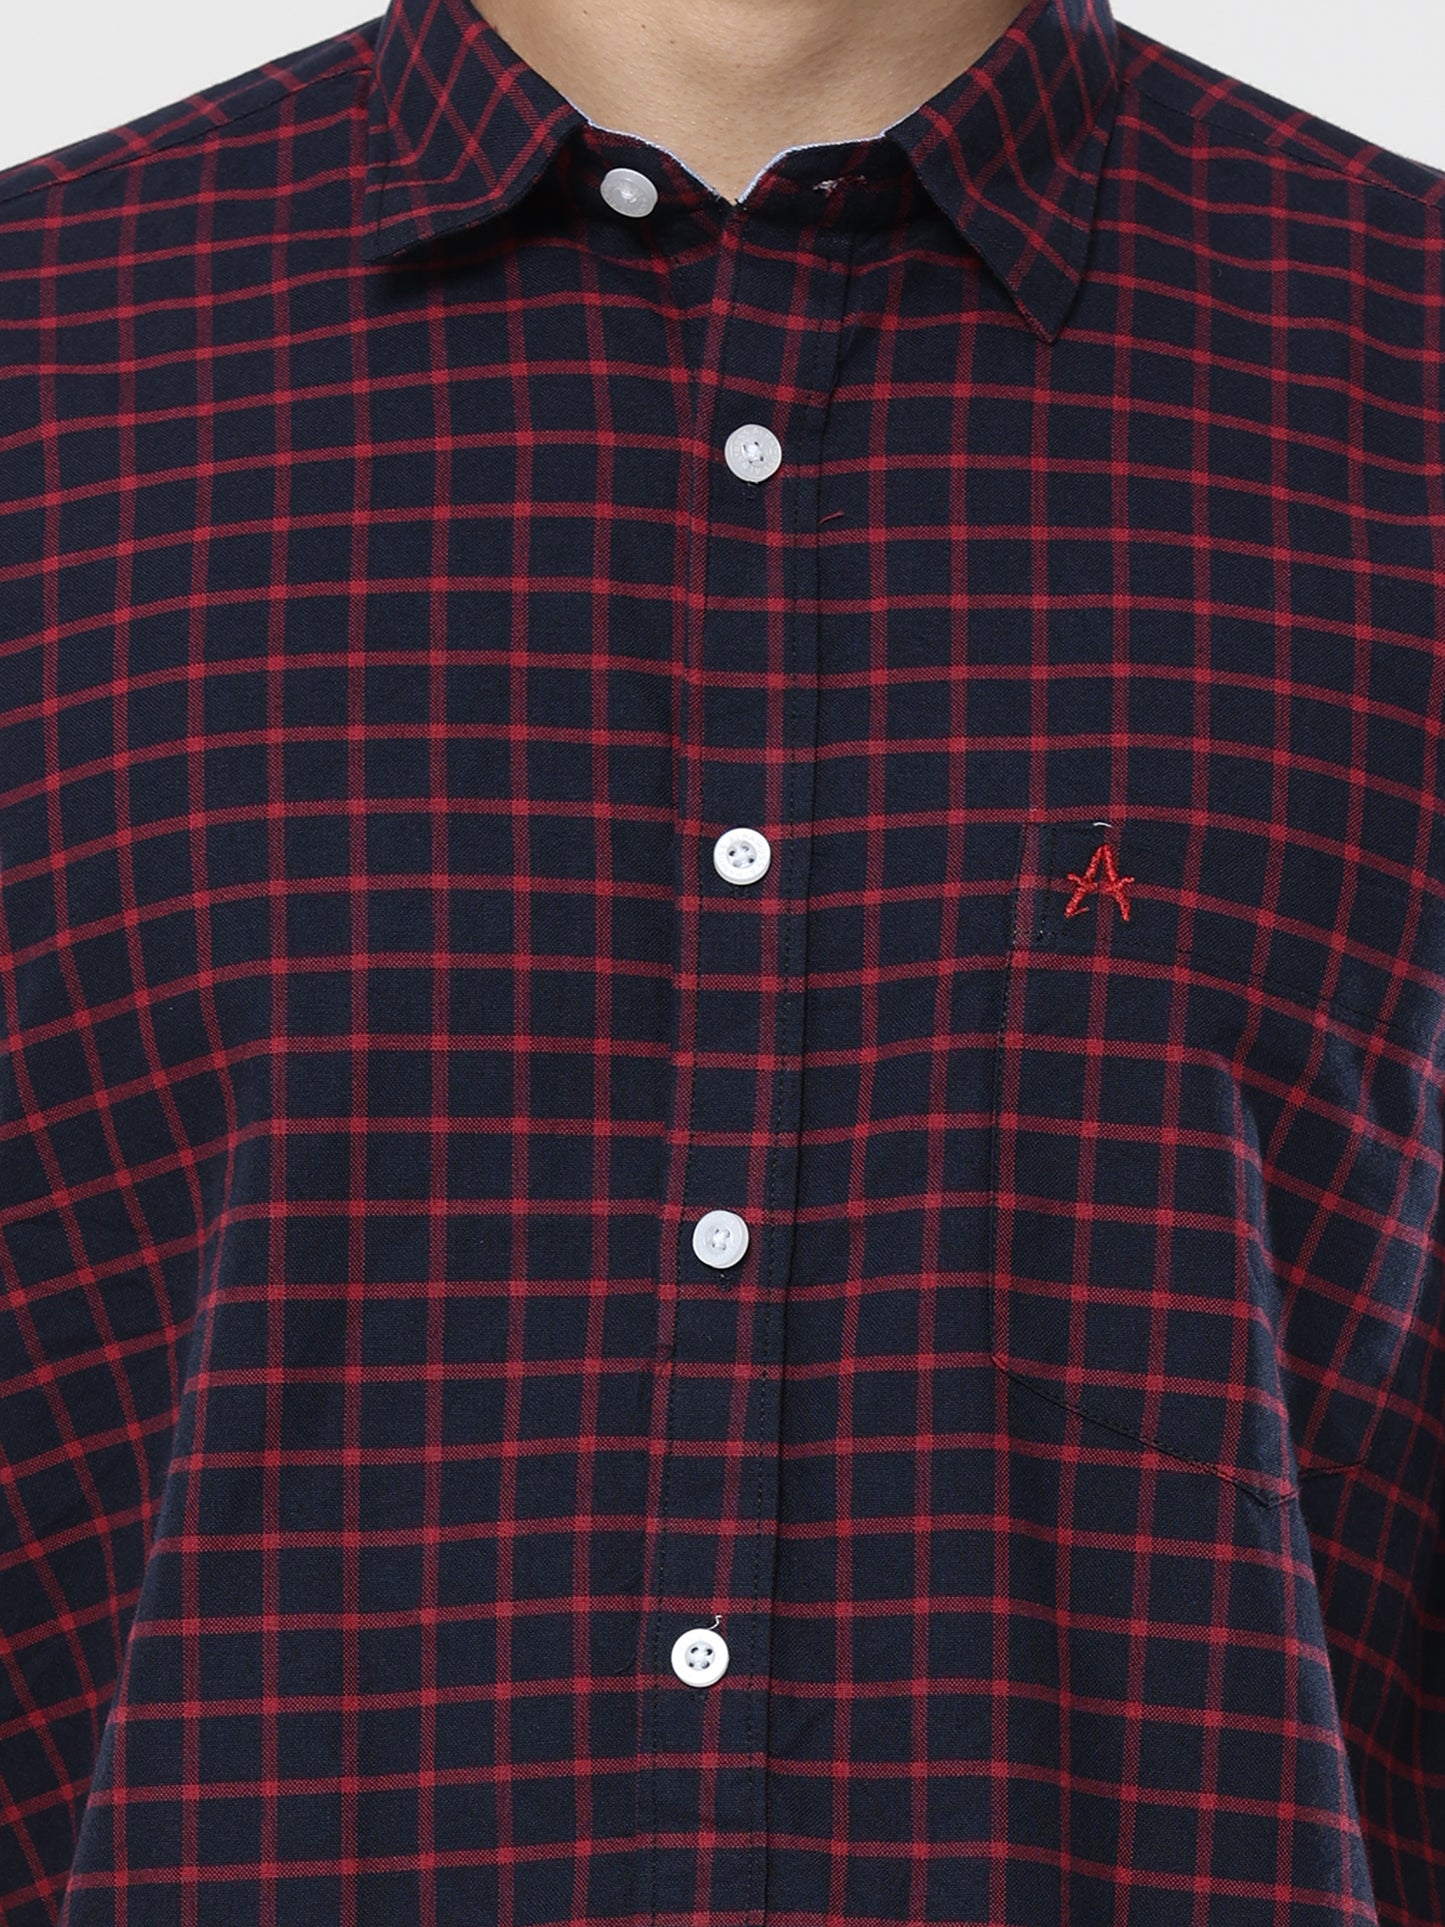 Red blue graph checks shirt for men